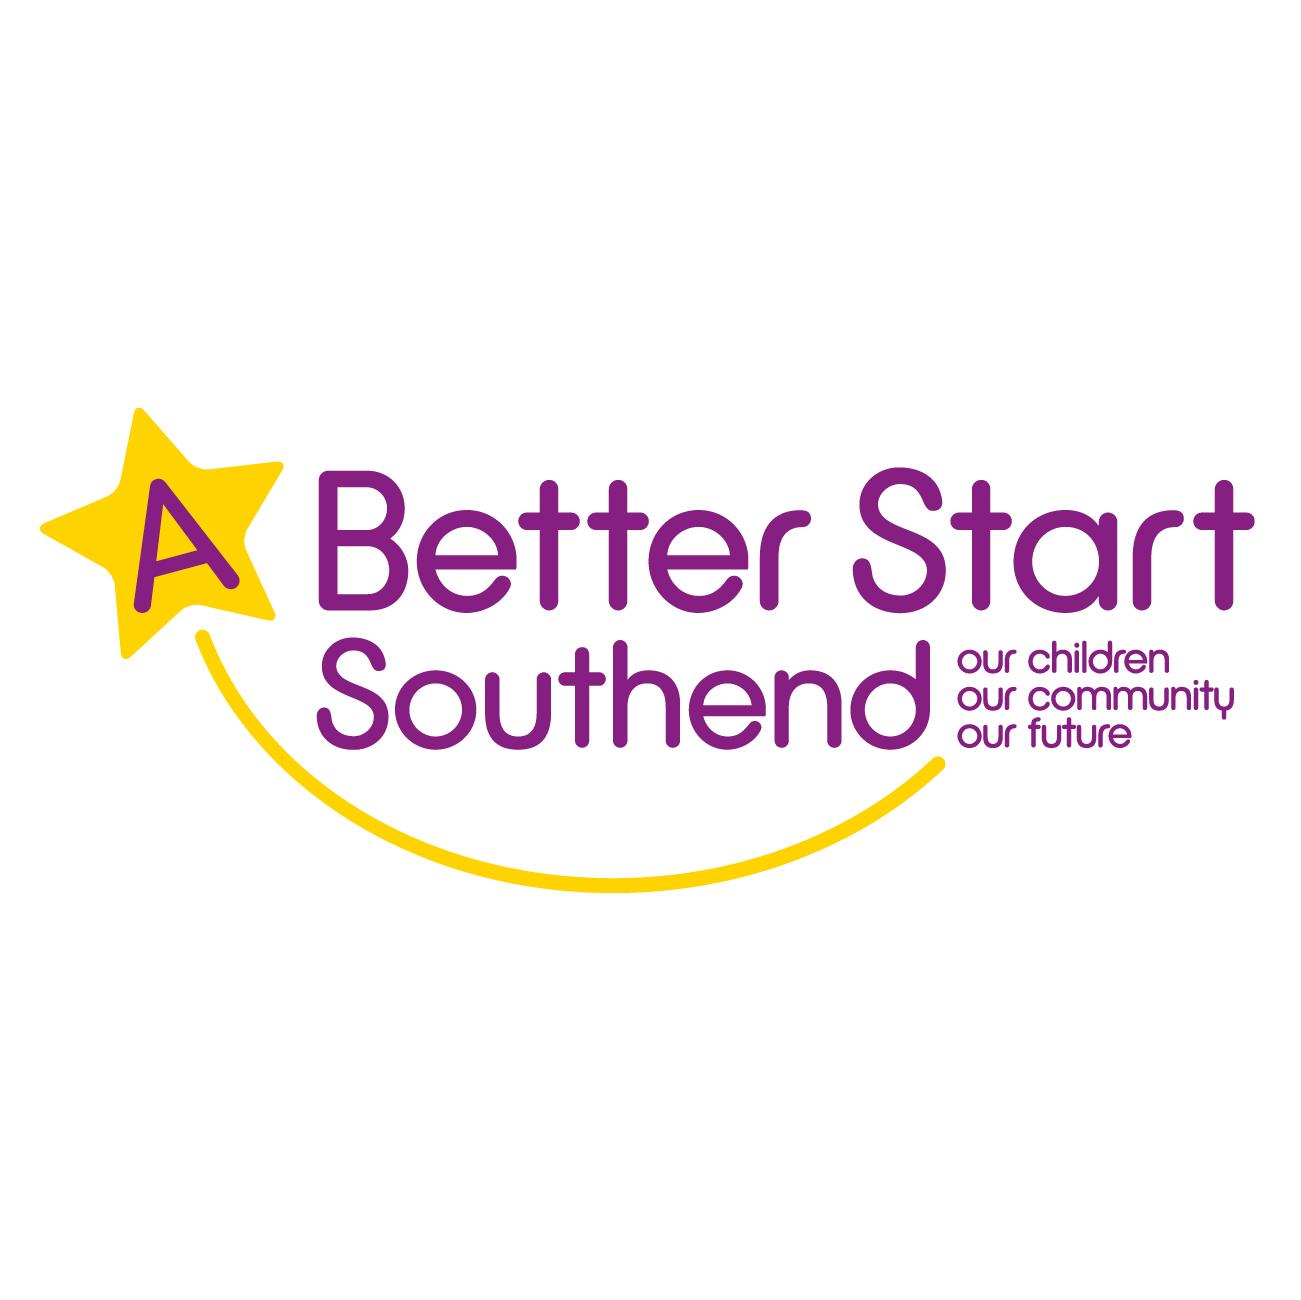 A Better Start Southend logo